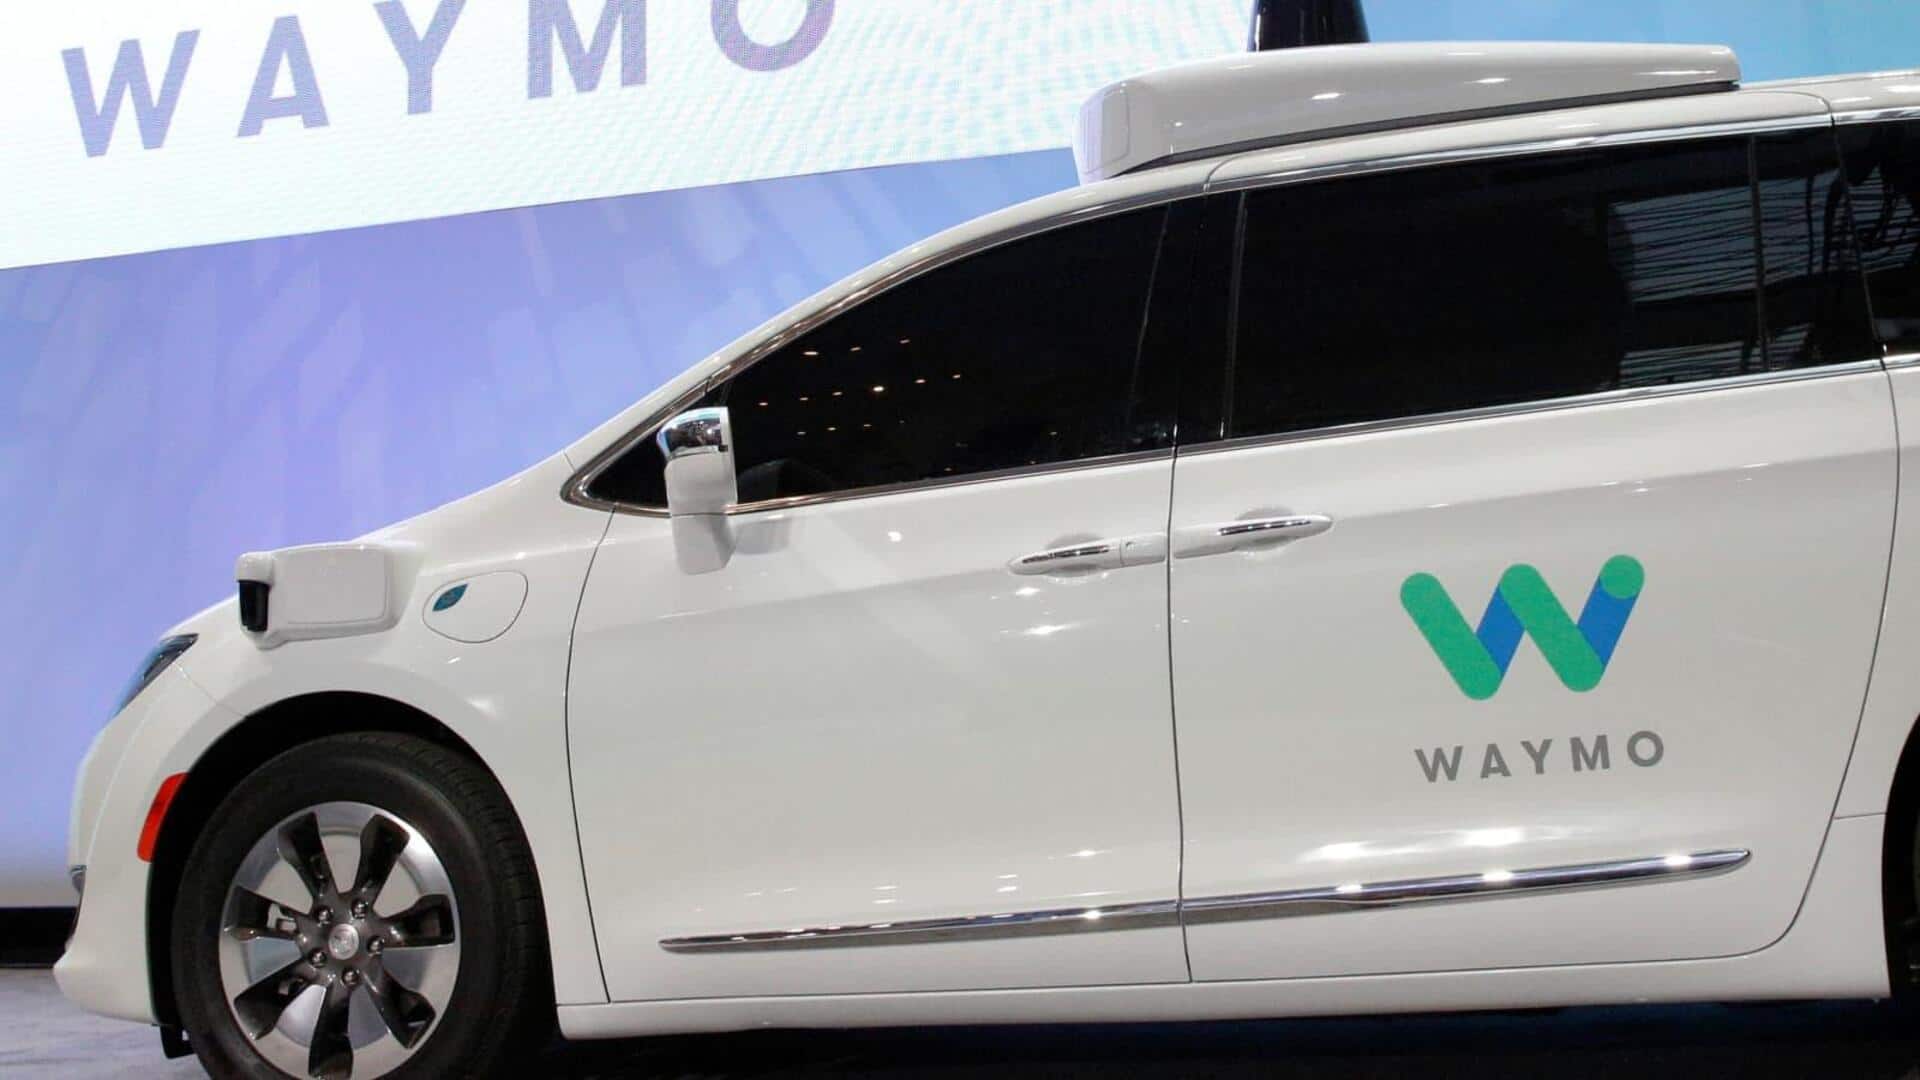 US regulator broadens investigation into Waymo's autonomous vehicles